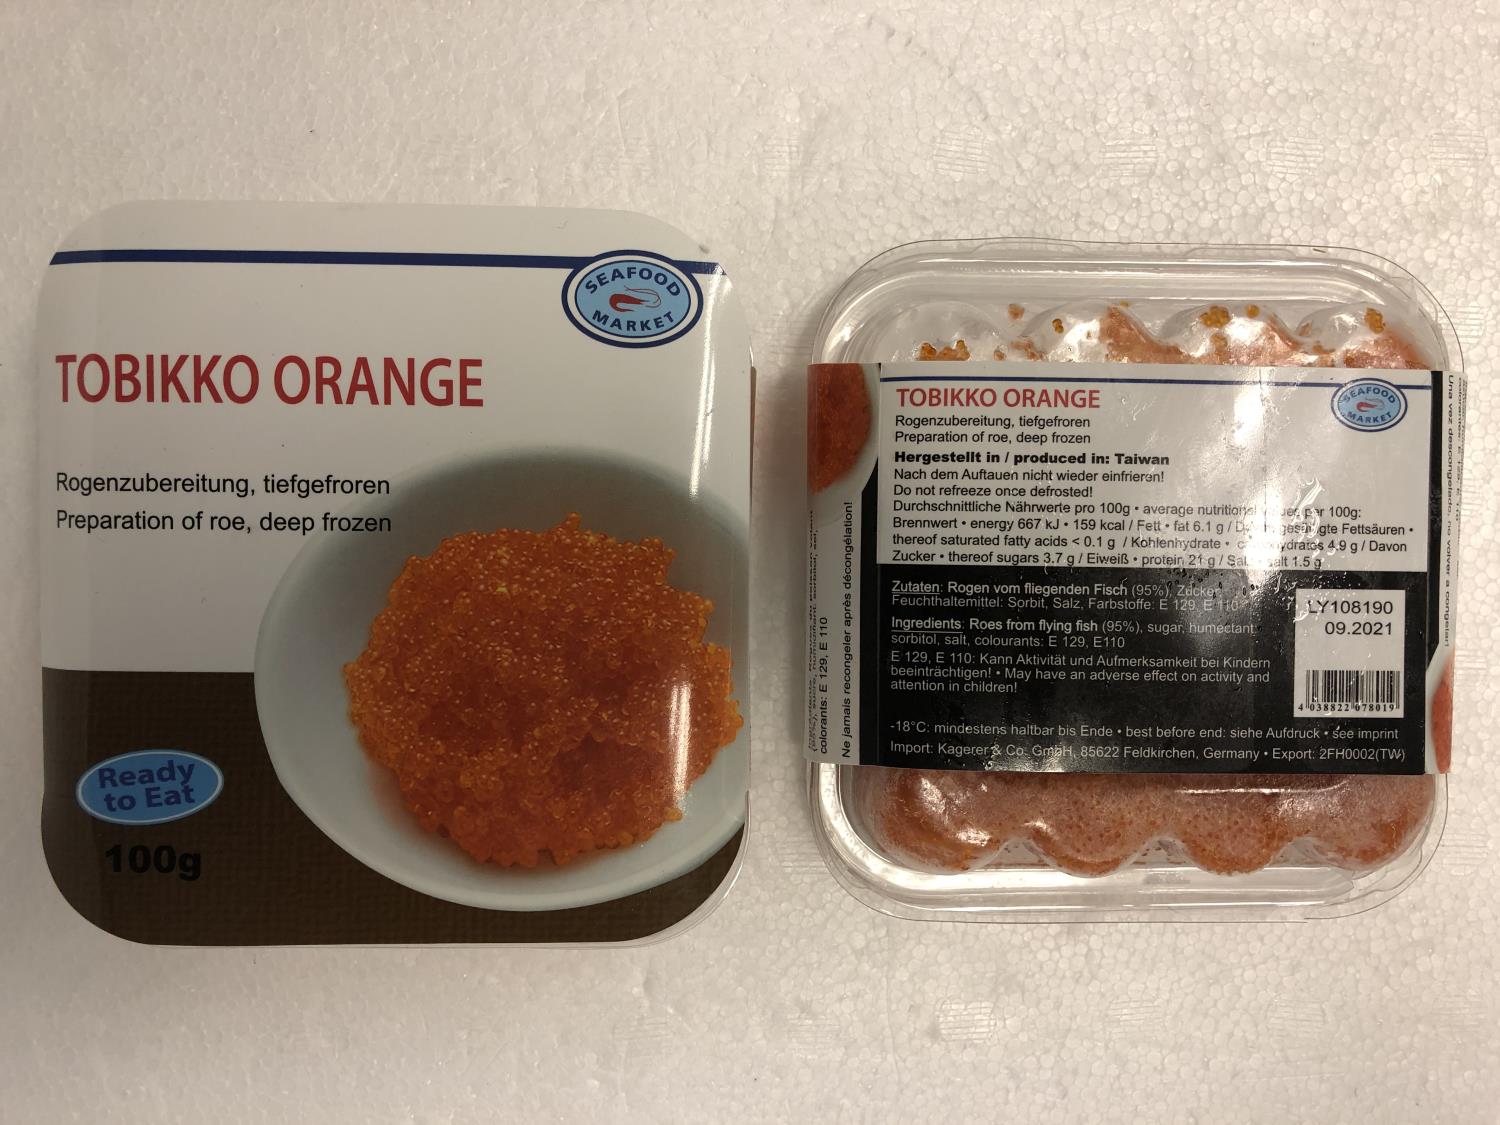 SEAFOOD MARKET Tobikko Orange Fish Roe 100gr ø